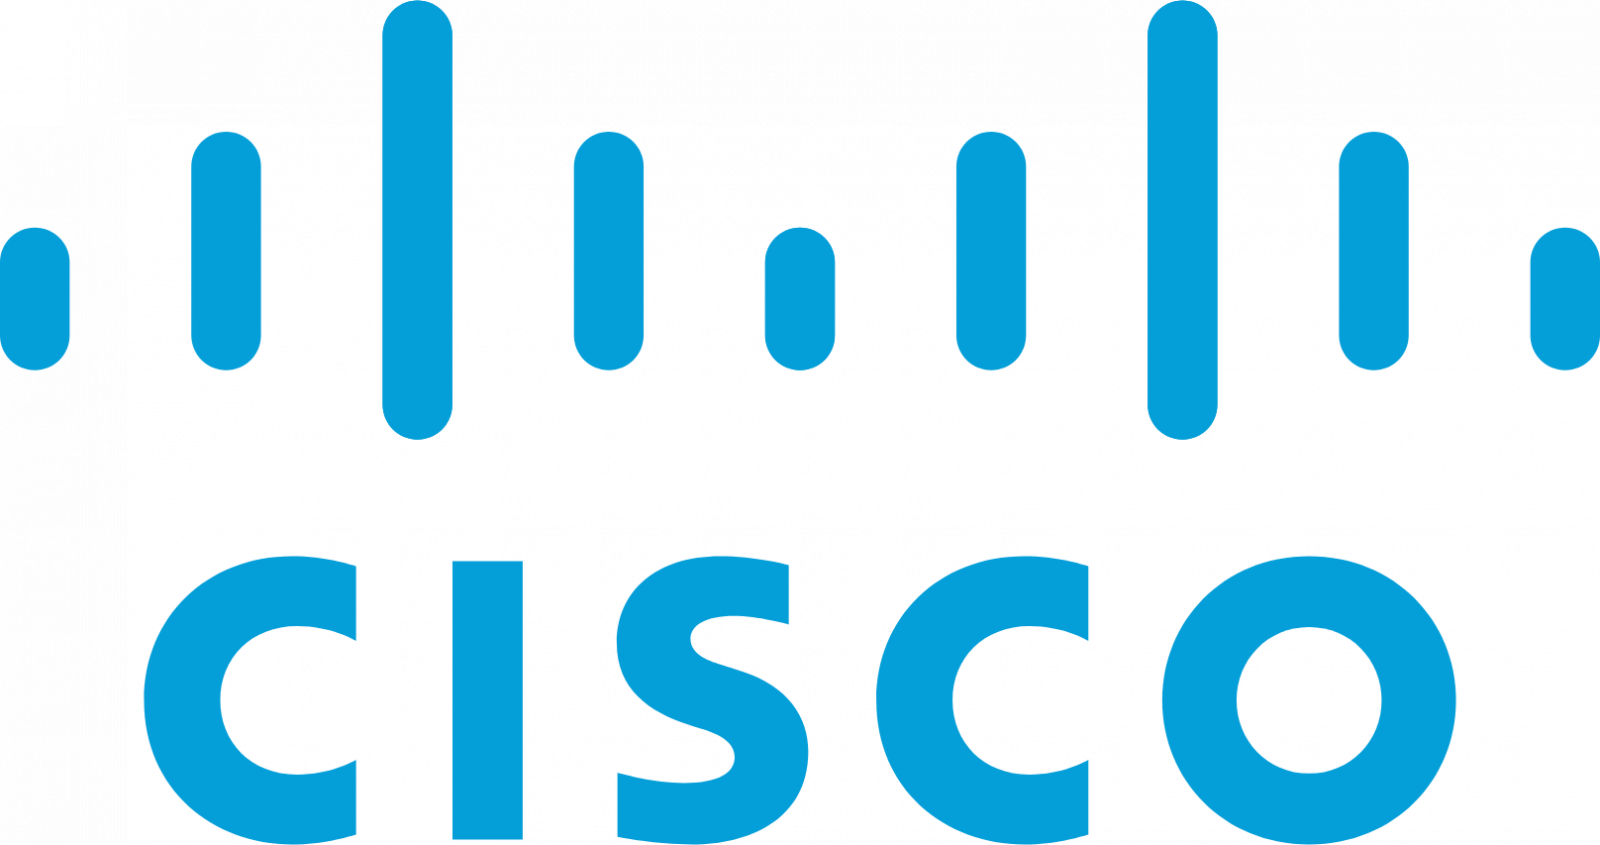 Cisco it companies in Hyderabad